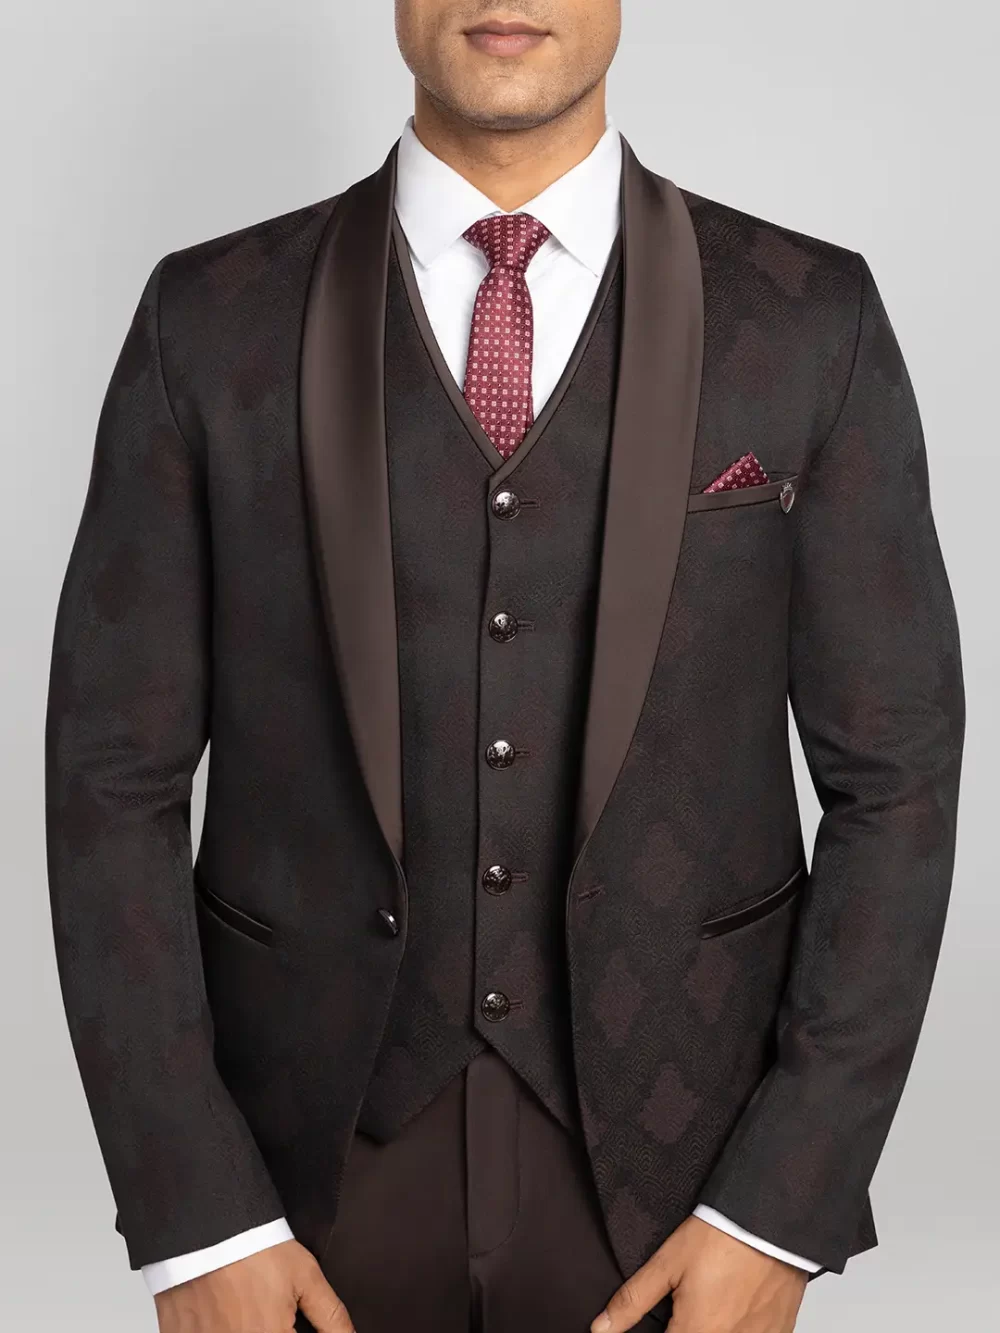 5 piece Textured Tuxedo Suit - Wine